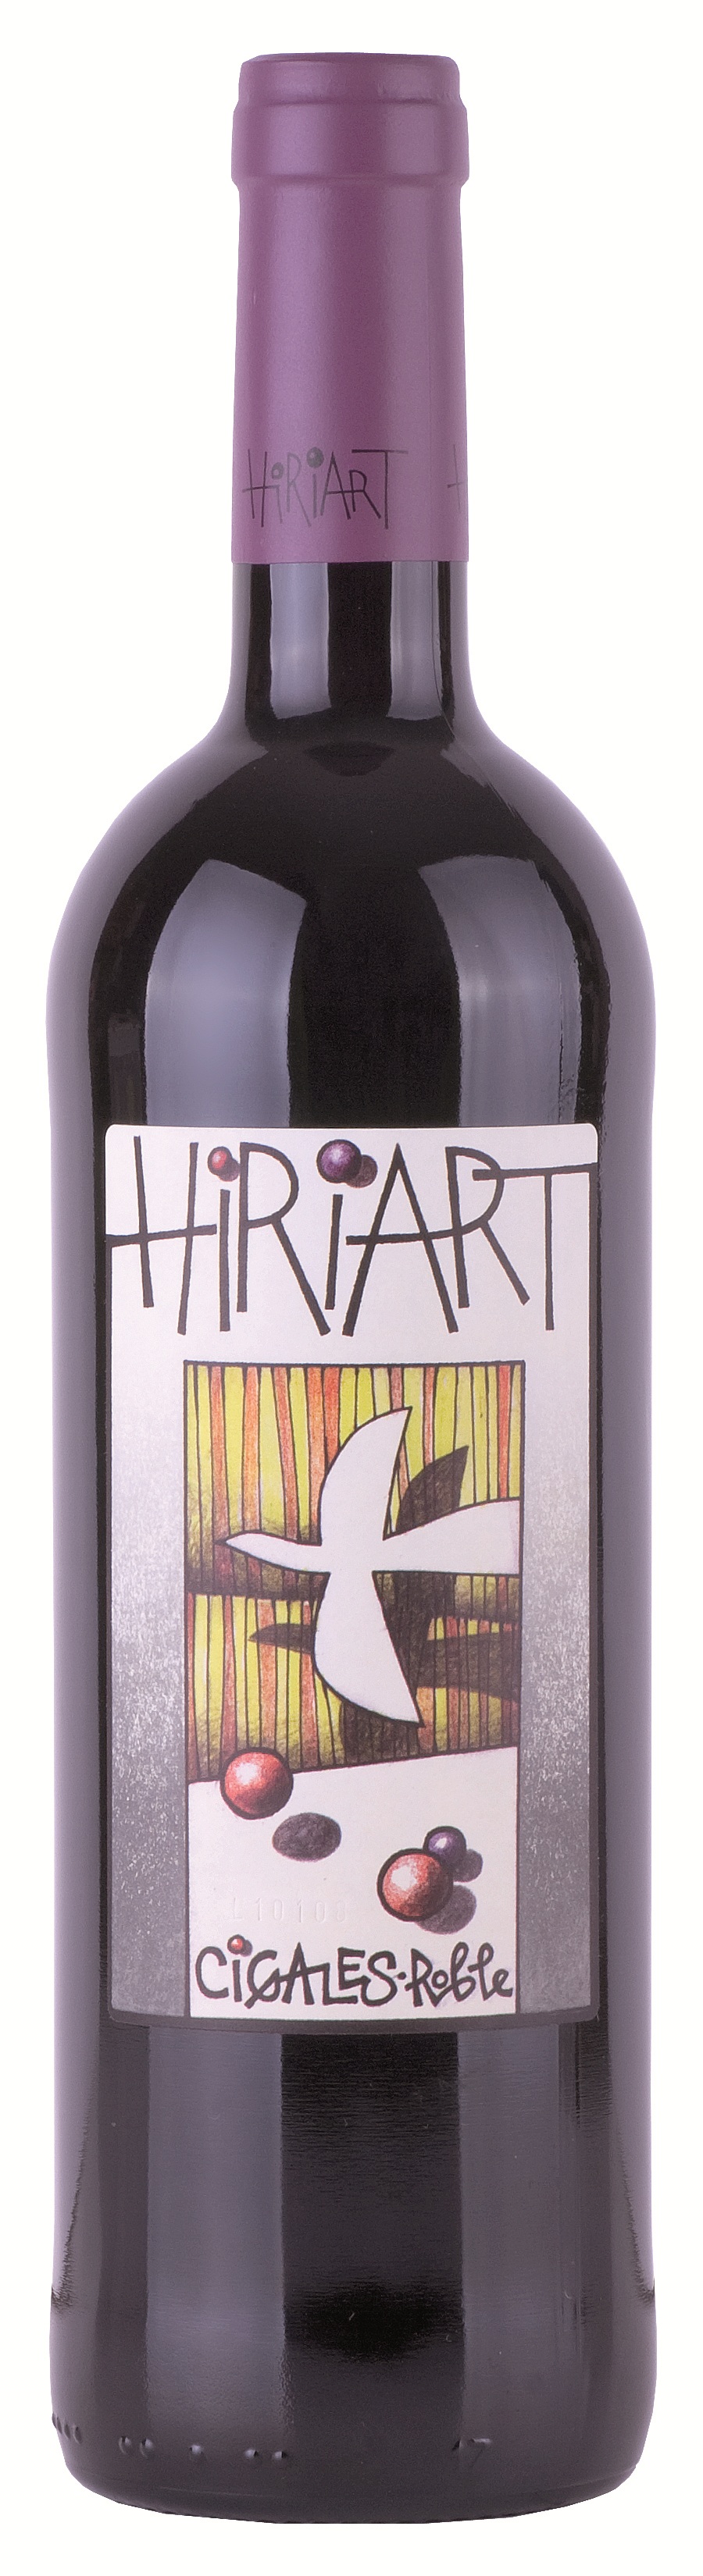 Logo del vino Hiriart Tinto Roble